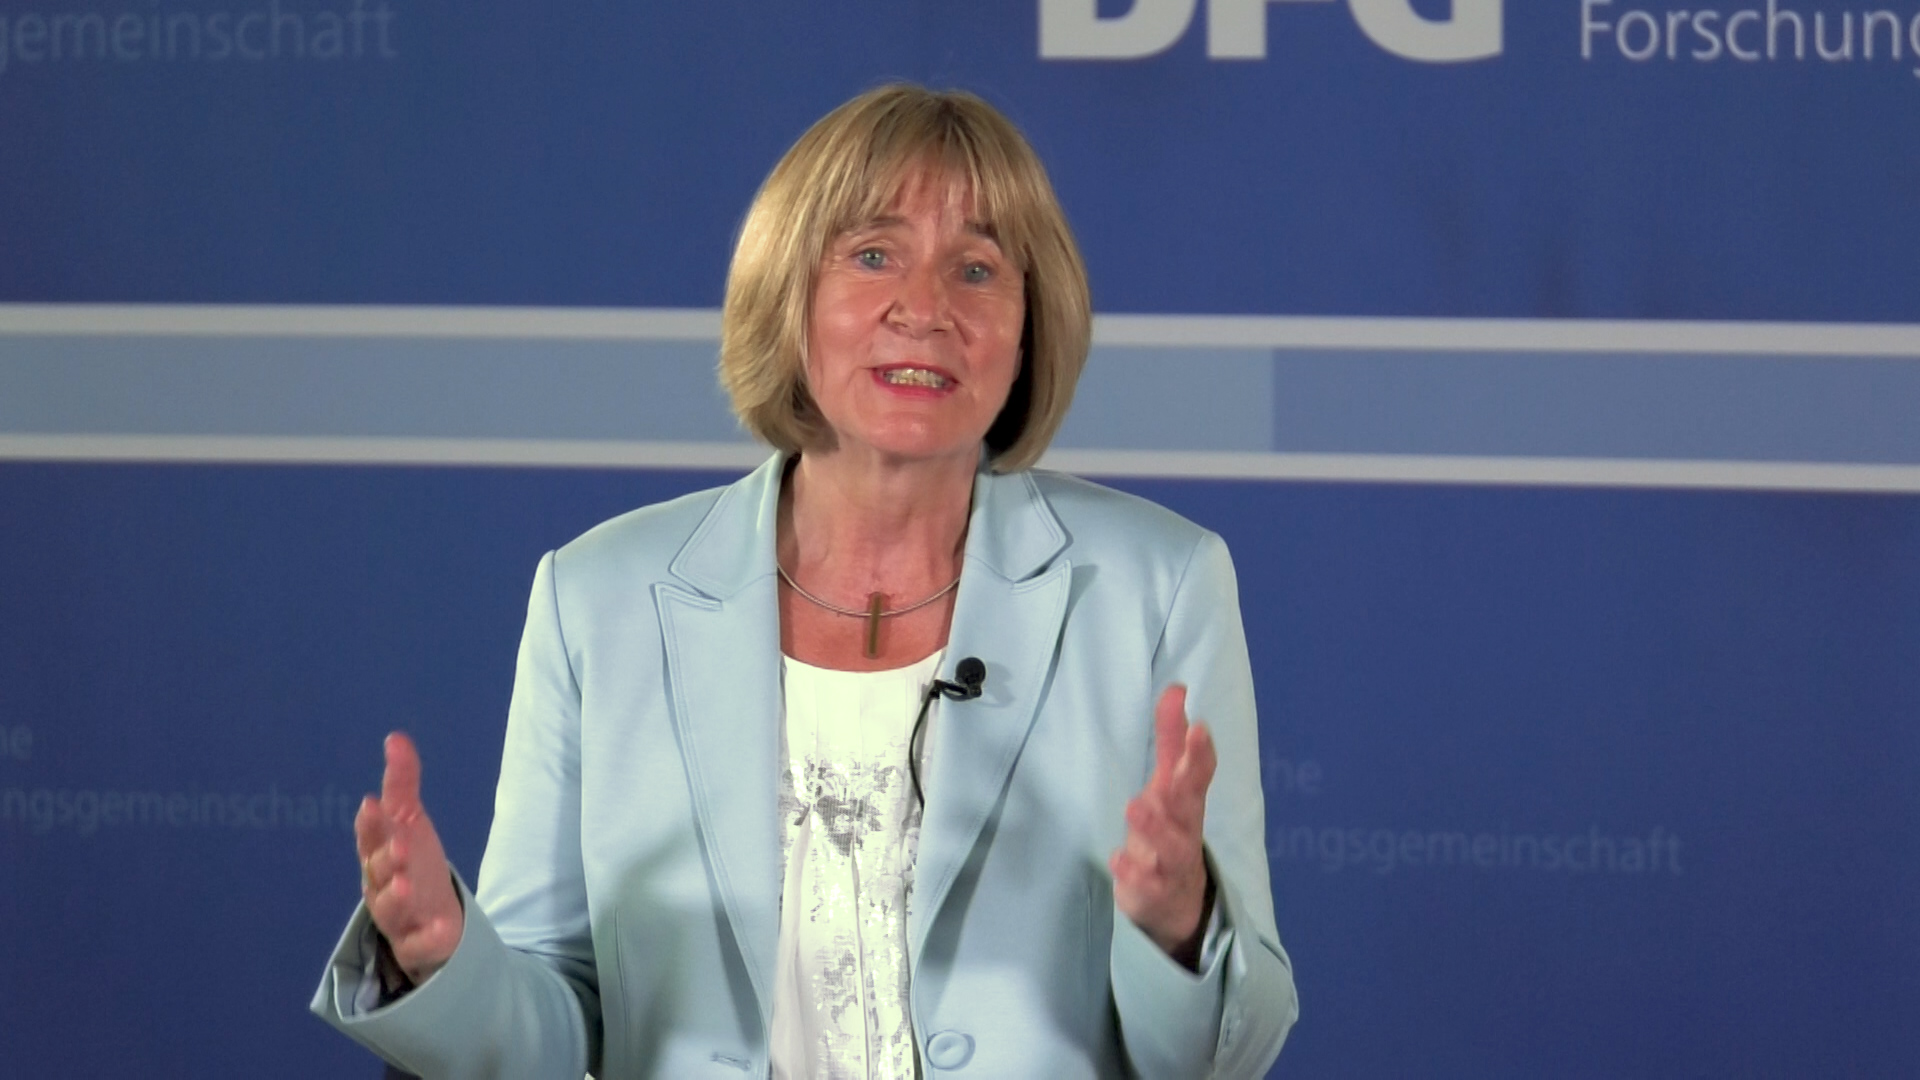 DFG-Generalsekretärin Dr. Heide Ahrens